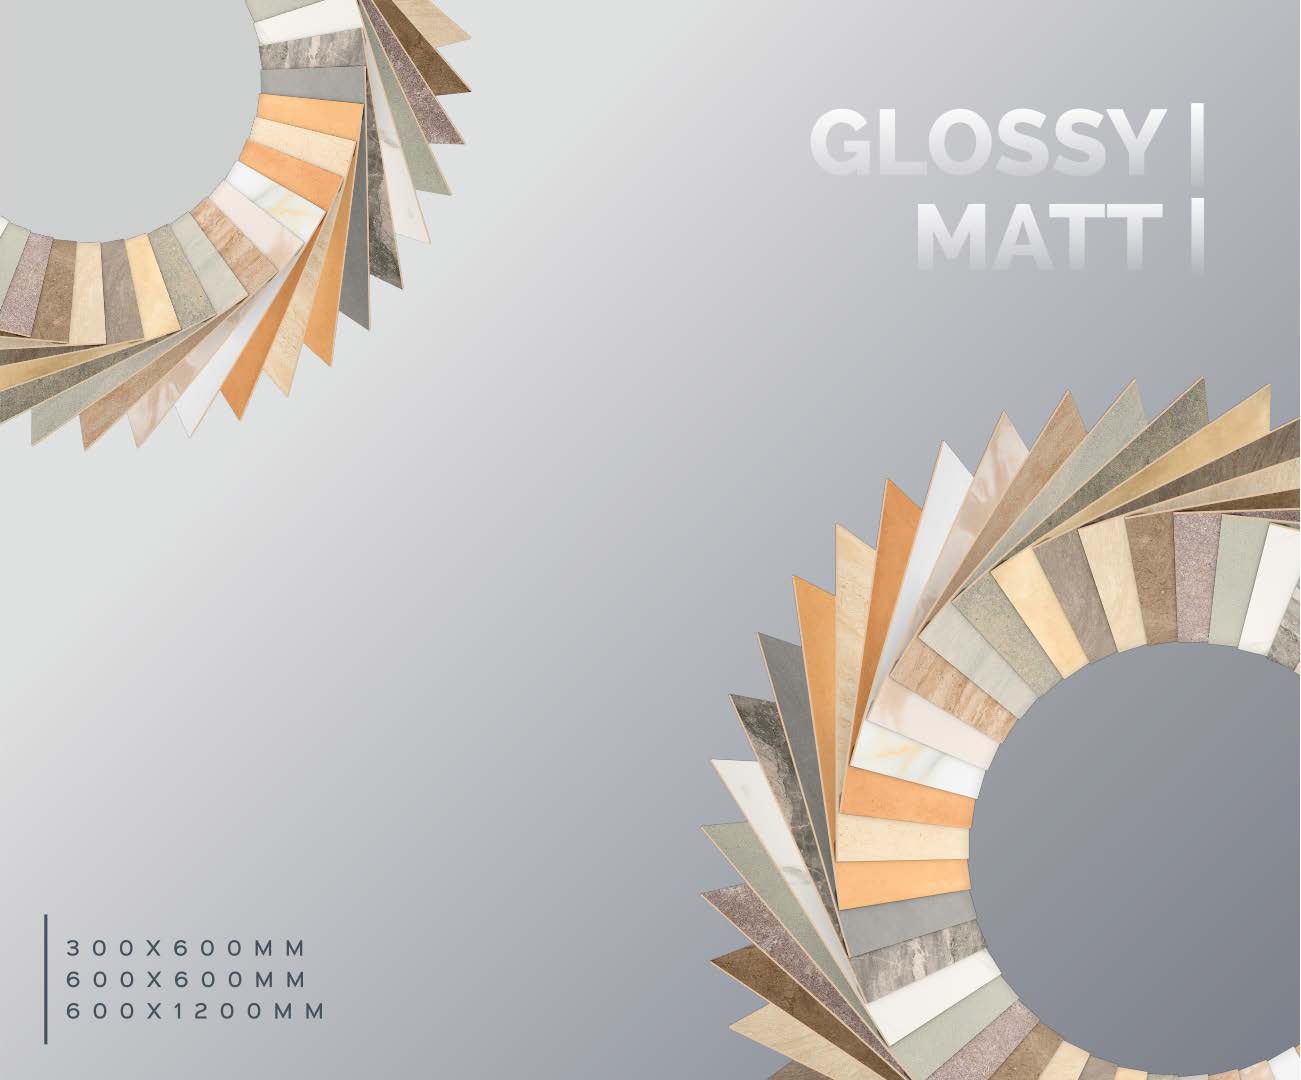 Glossy, Matt